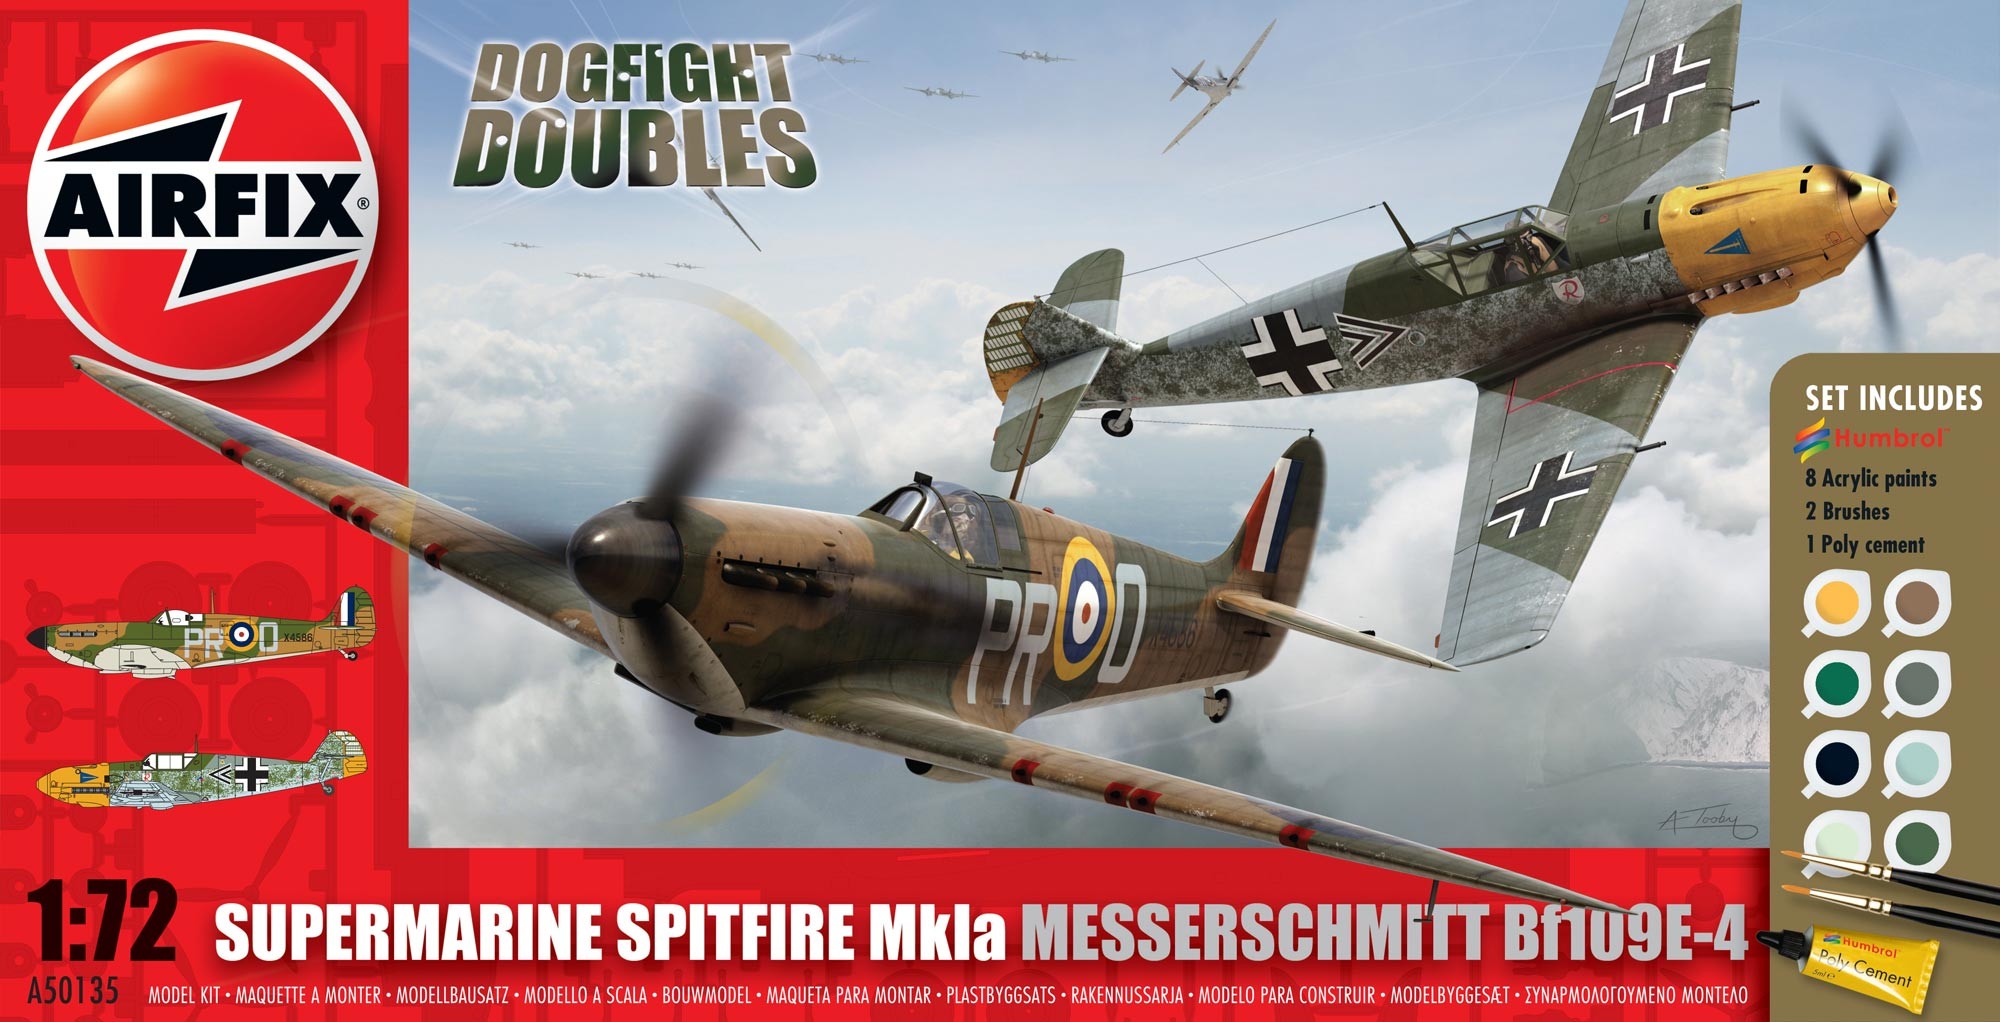 Airfix Dogfight Double Spitfire 1A/BF 109E - 1:72 bouwpakket met lijm en verf